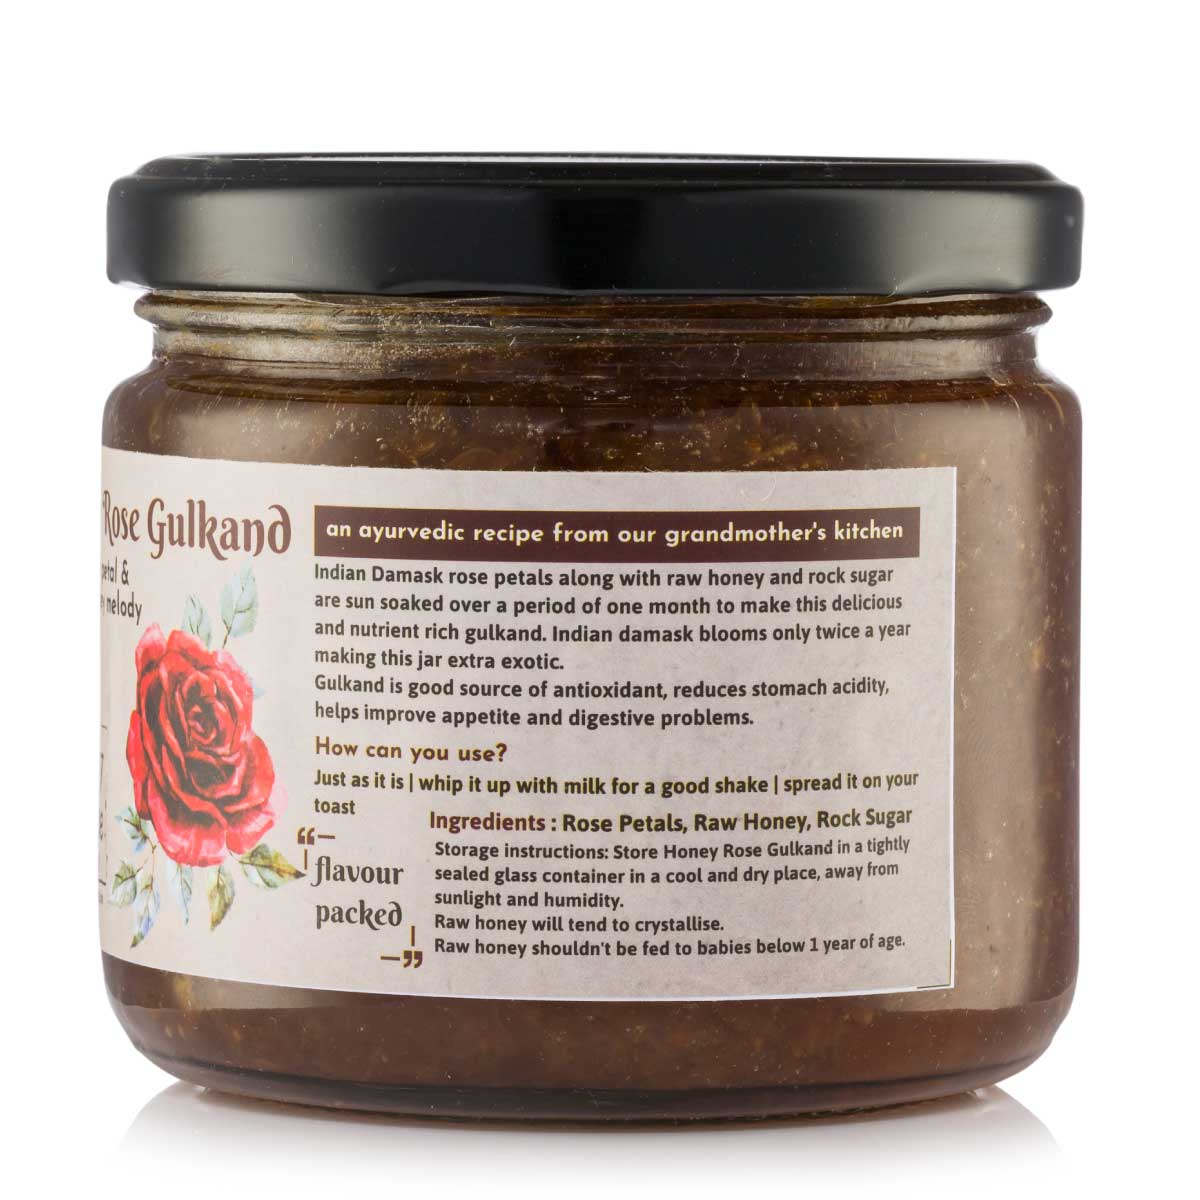 Product: Honey and Spice Honey Rose Gulkhand